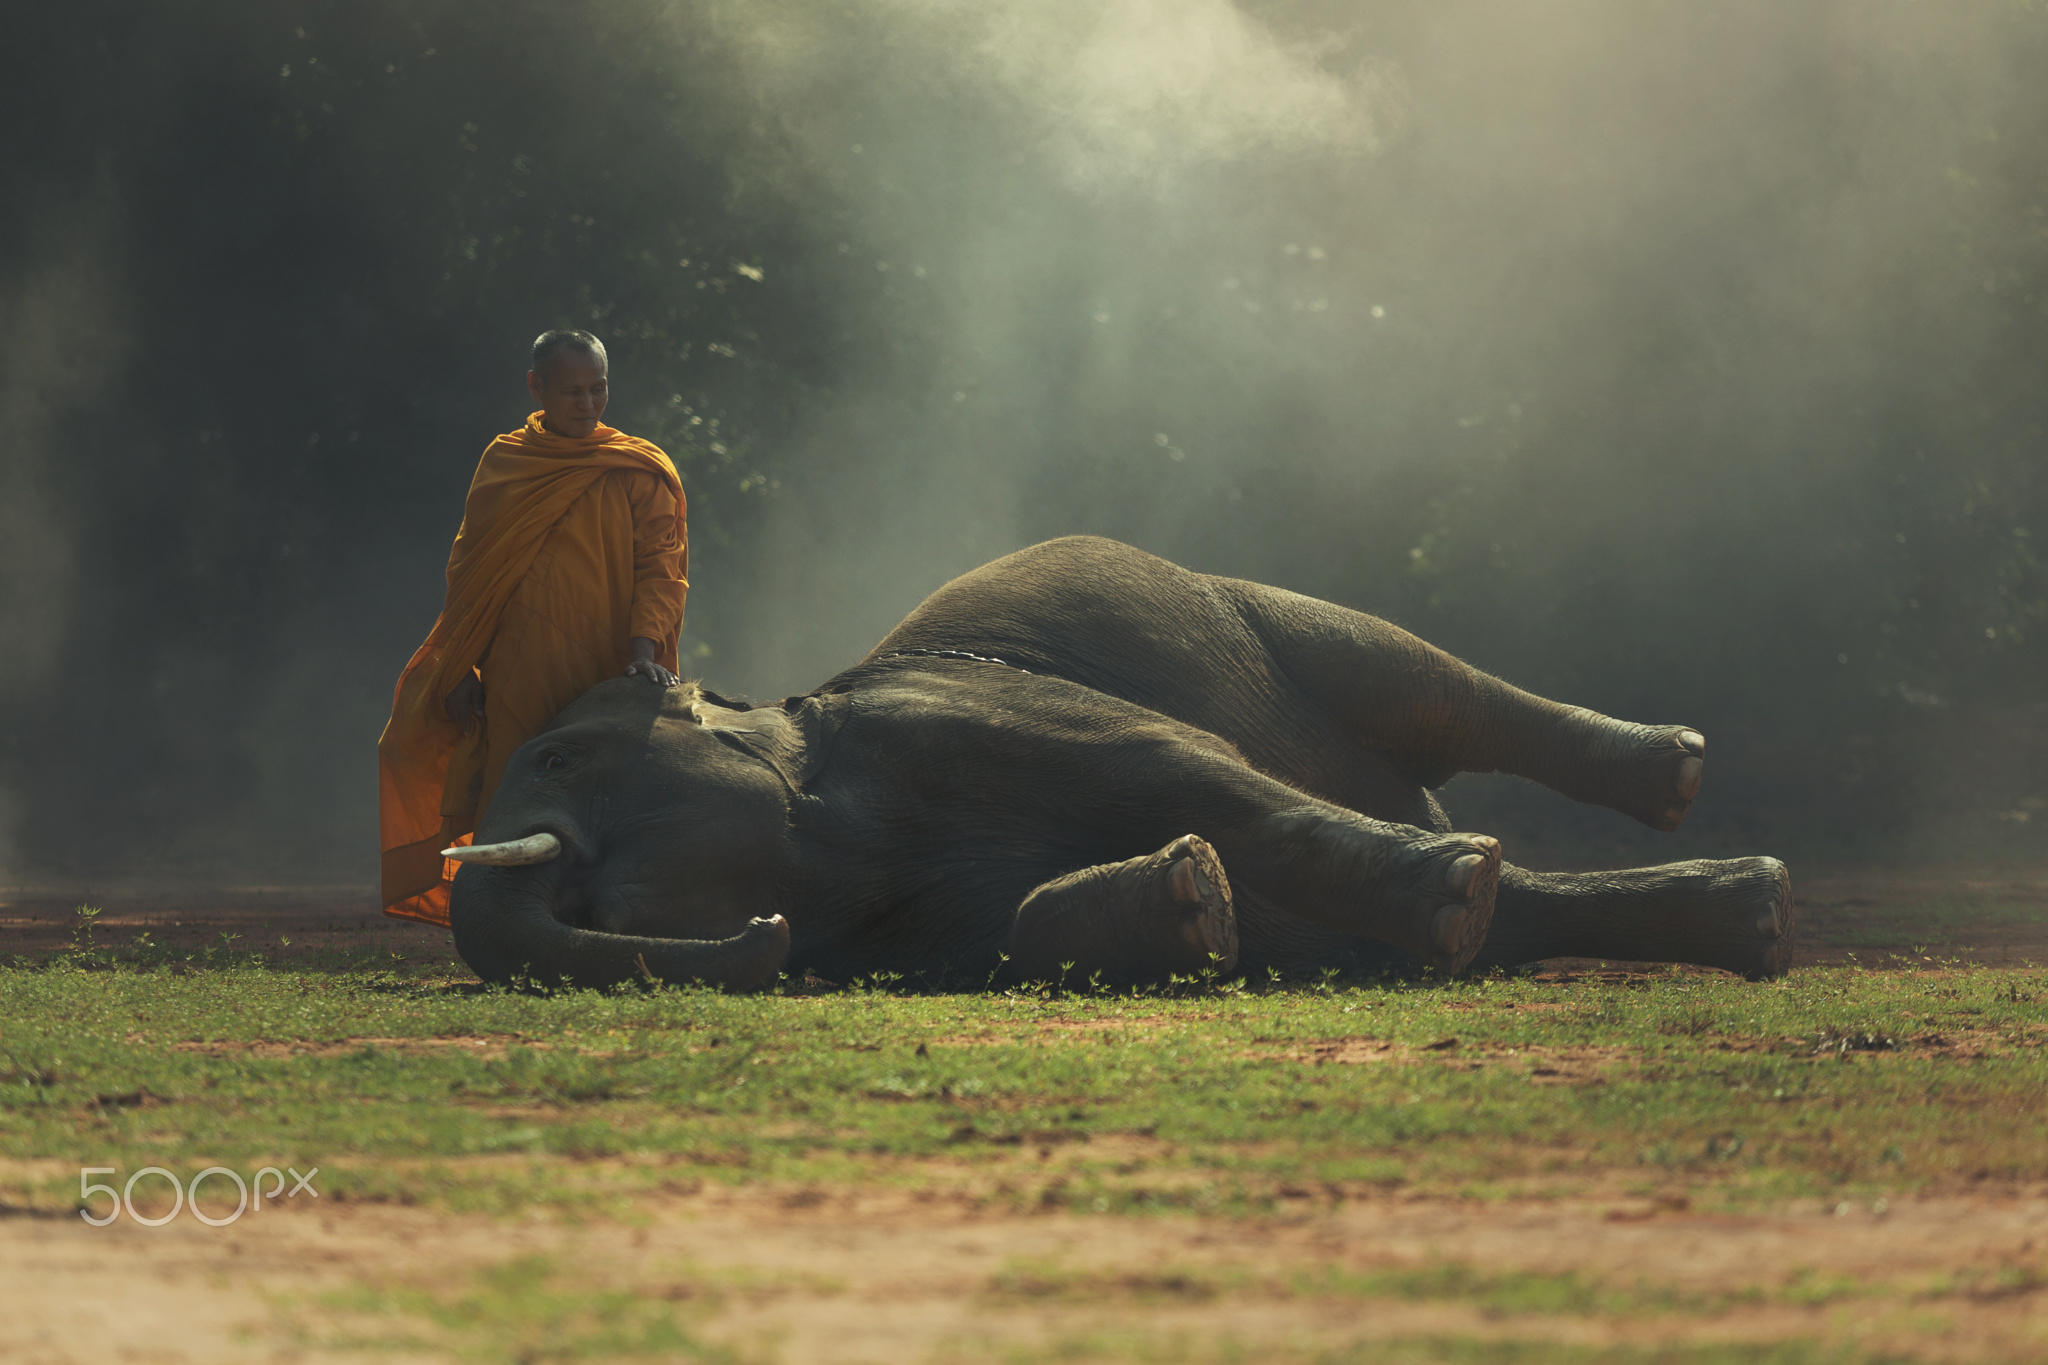 Monk with baby elephant